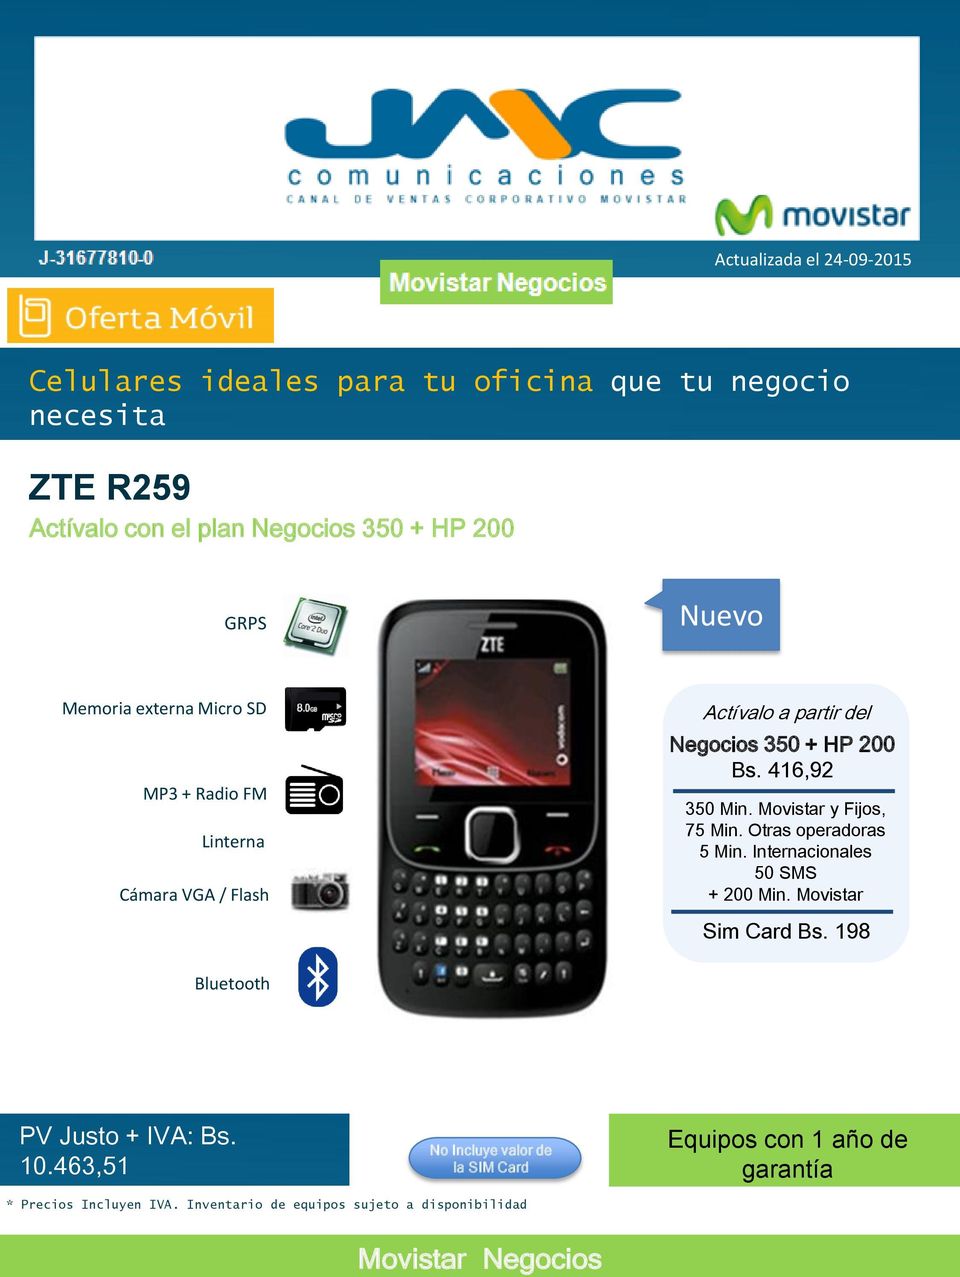 Movistar y Fijos, 75 Min. Otras operadoras 5 Min. Internacionales 50 SMS + 200 Min. Movistar Sim Card Bs. 198 Bluetooth PV Justo + IVA: Bs.